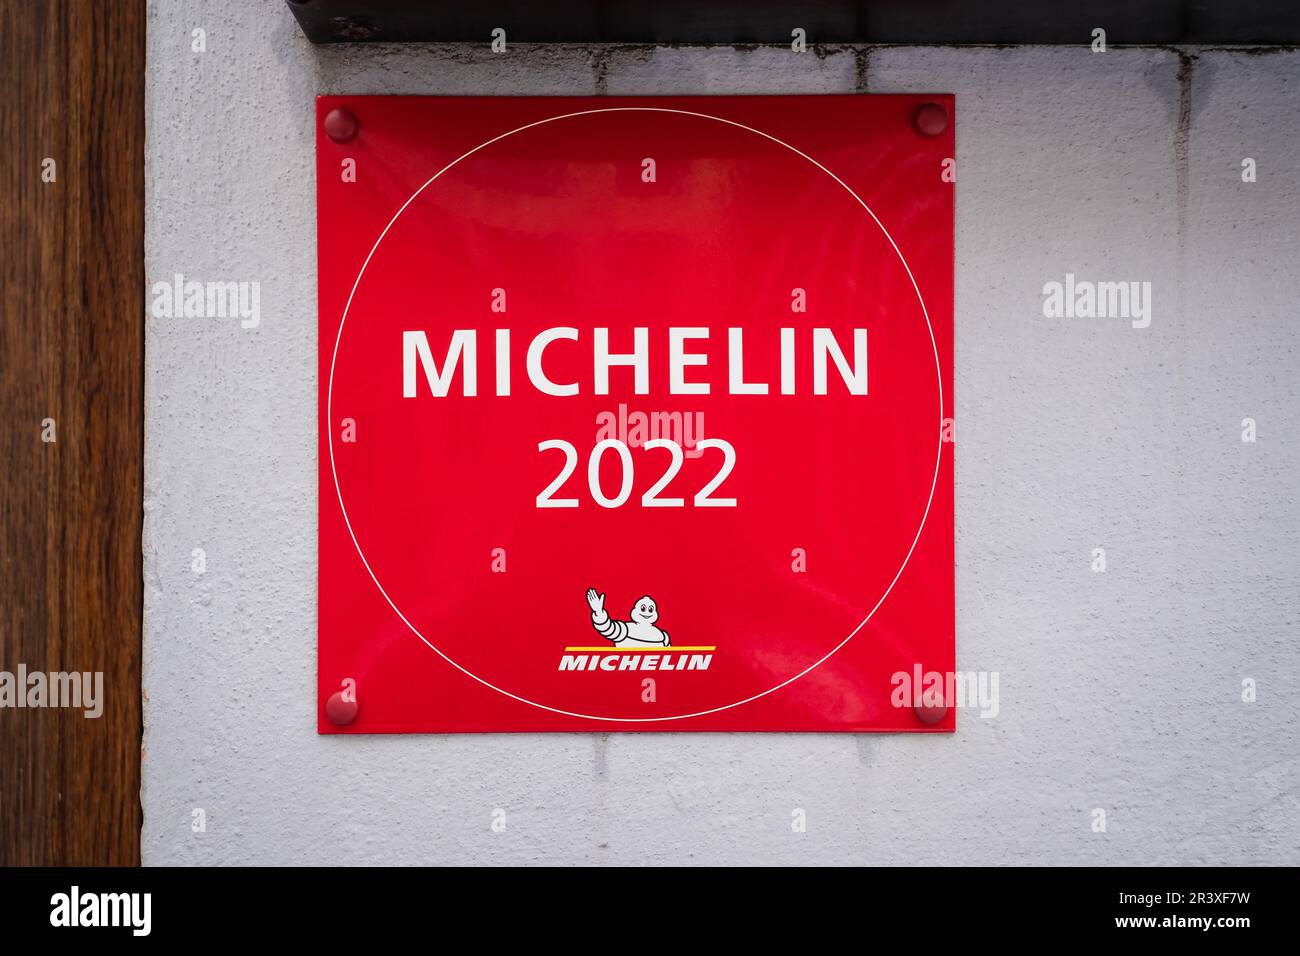 Tallinn, Estonia - February 19, 2023: Michelin 2022 red sign plate on restaurant wall. Stock Photo